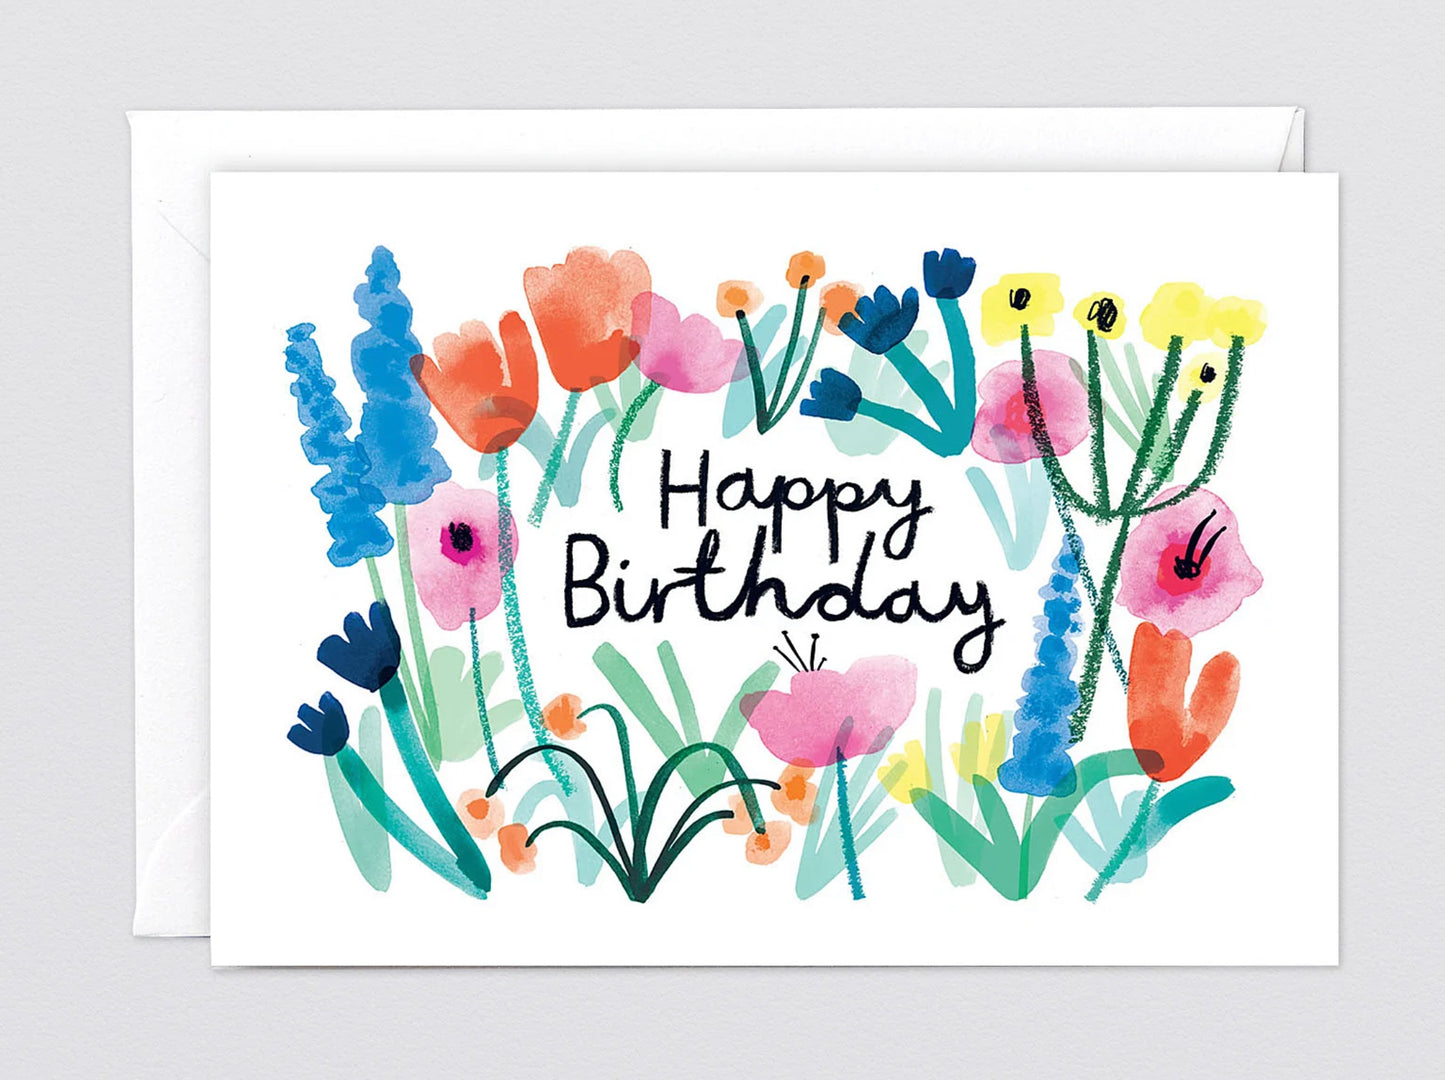 Wrap - 'Happy Birthday Floral' Greetings Card